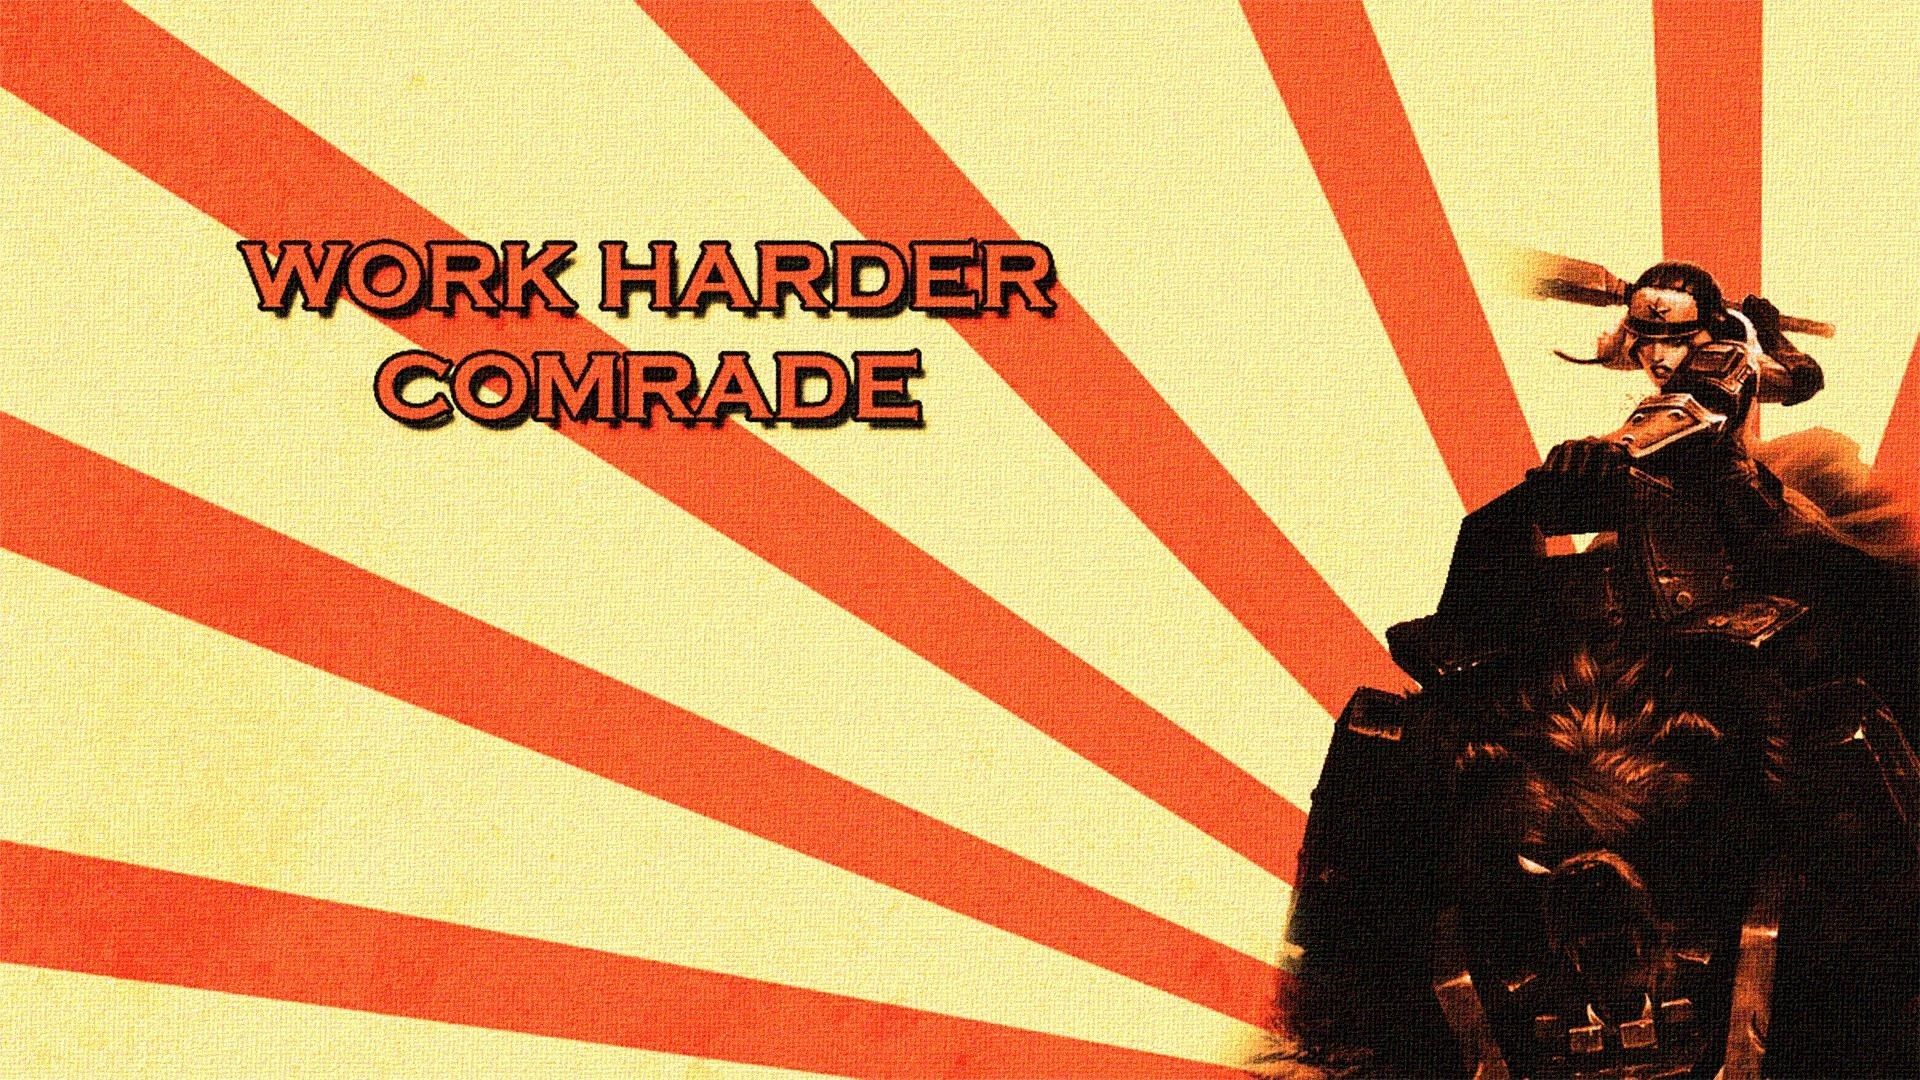 Communist Wallpaper Harder Comrade Wallpaper 1080p Wallpaper & Background Download